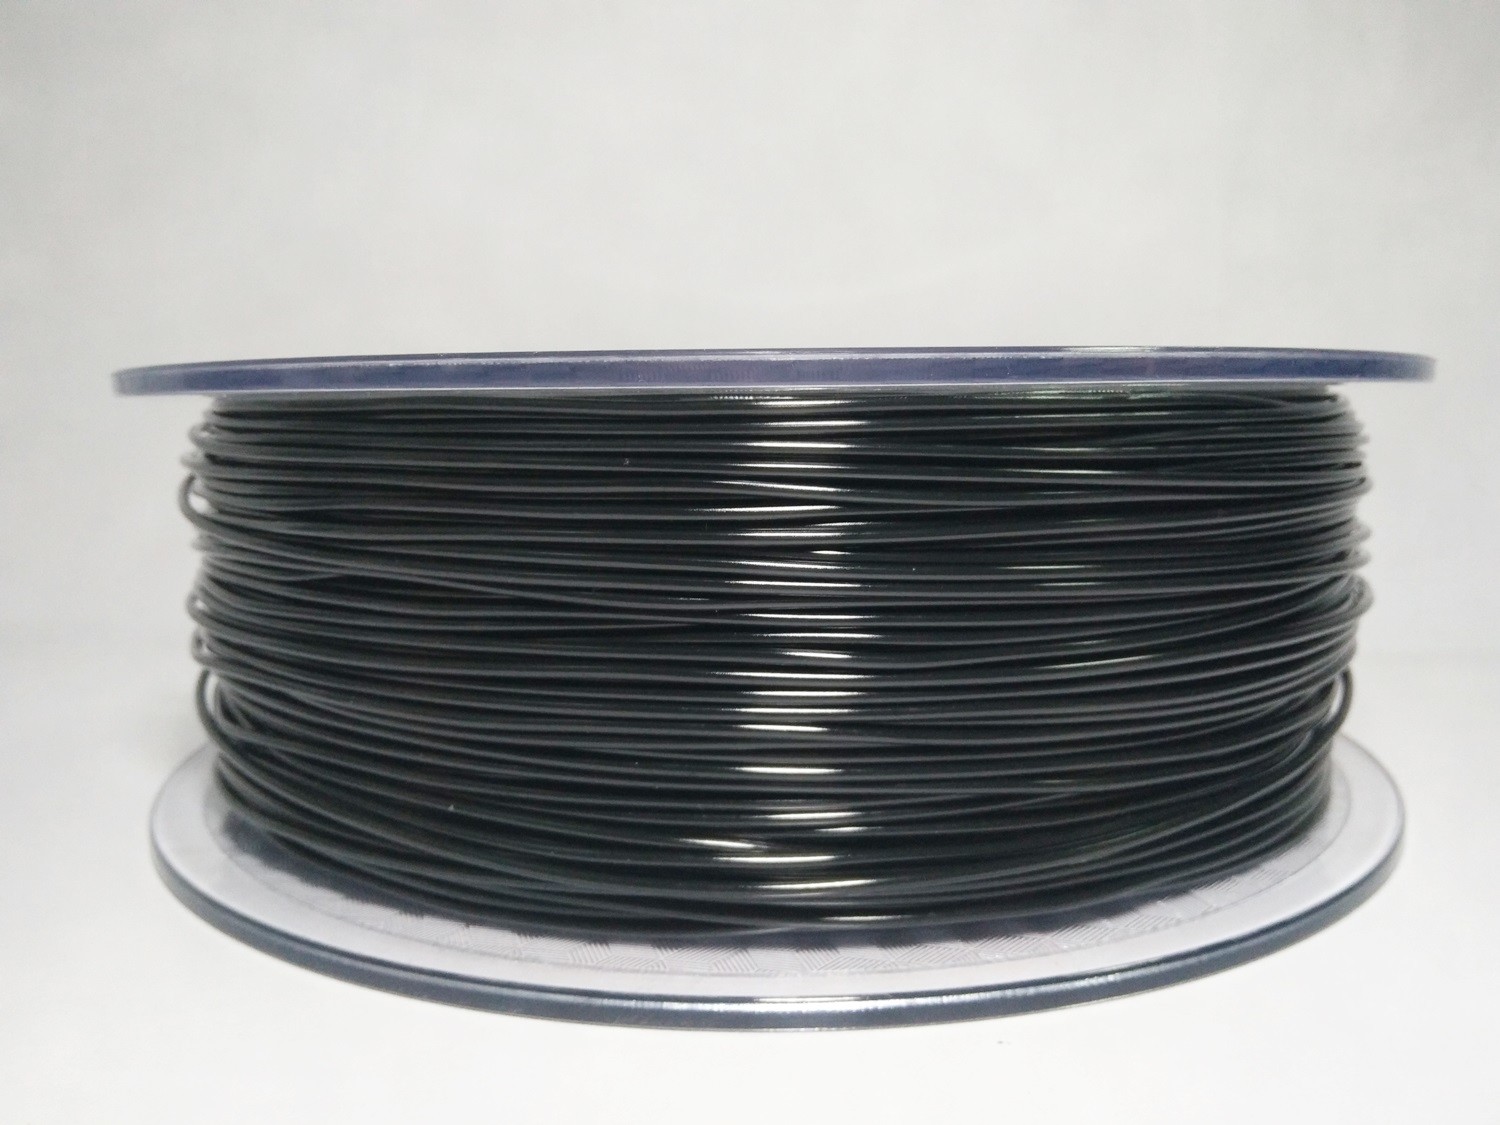 China PETG 1.75mm 3D Printer Filament , Dimensional Accuracy +/- 0.03mm , 2.2 LBS (1KG) Spool PETG Filament on sale